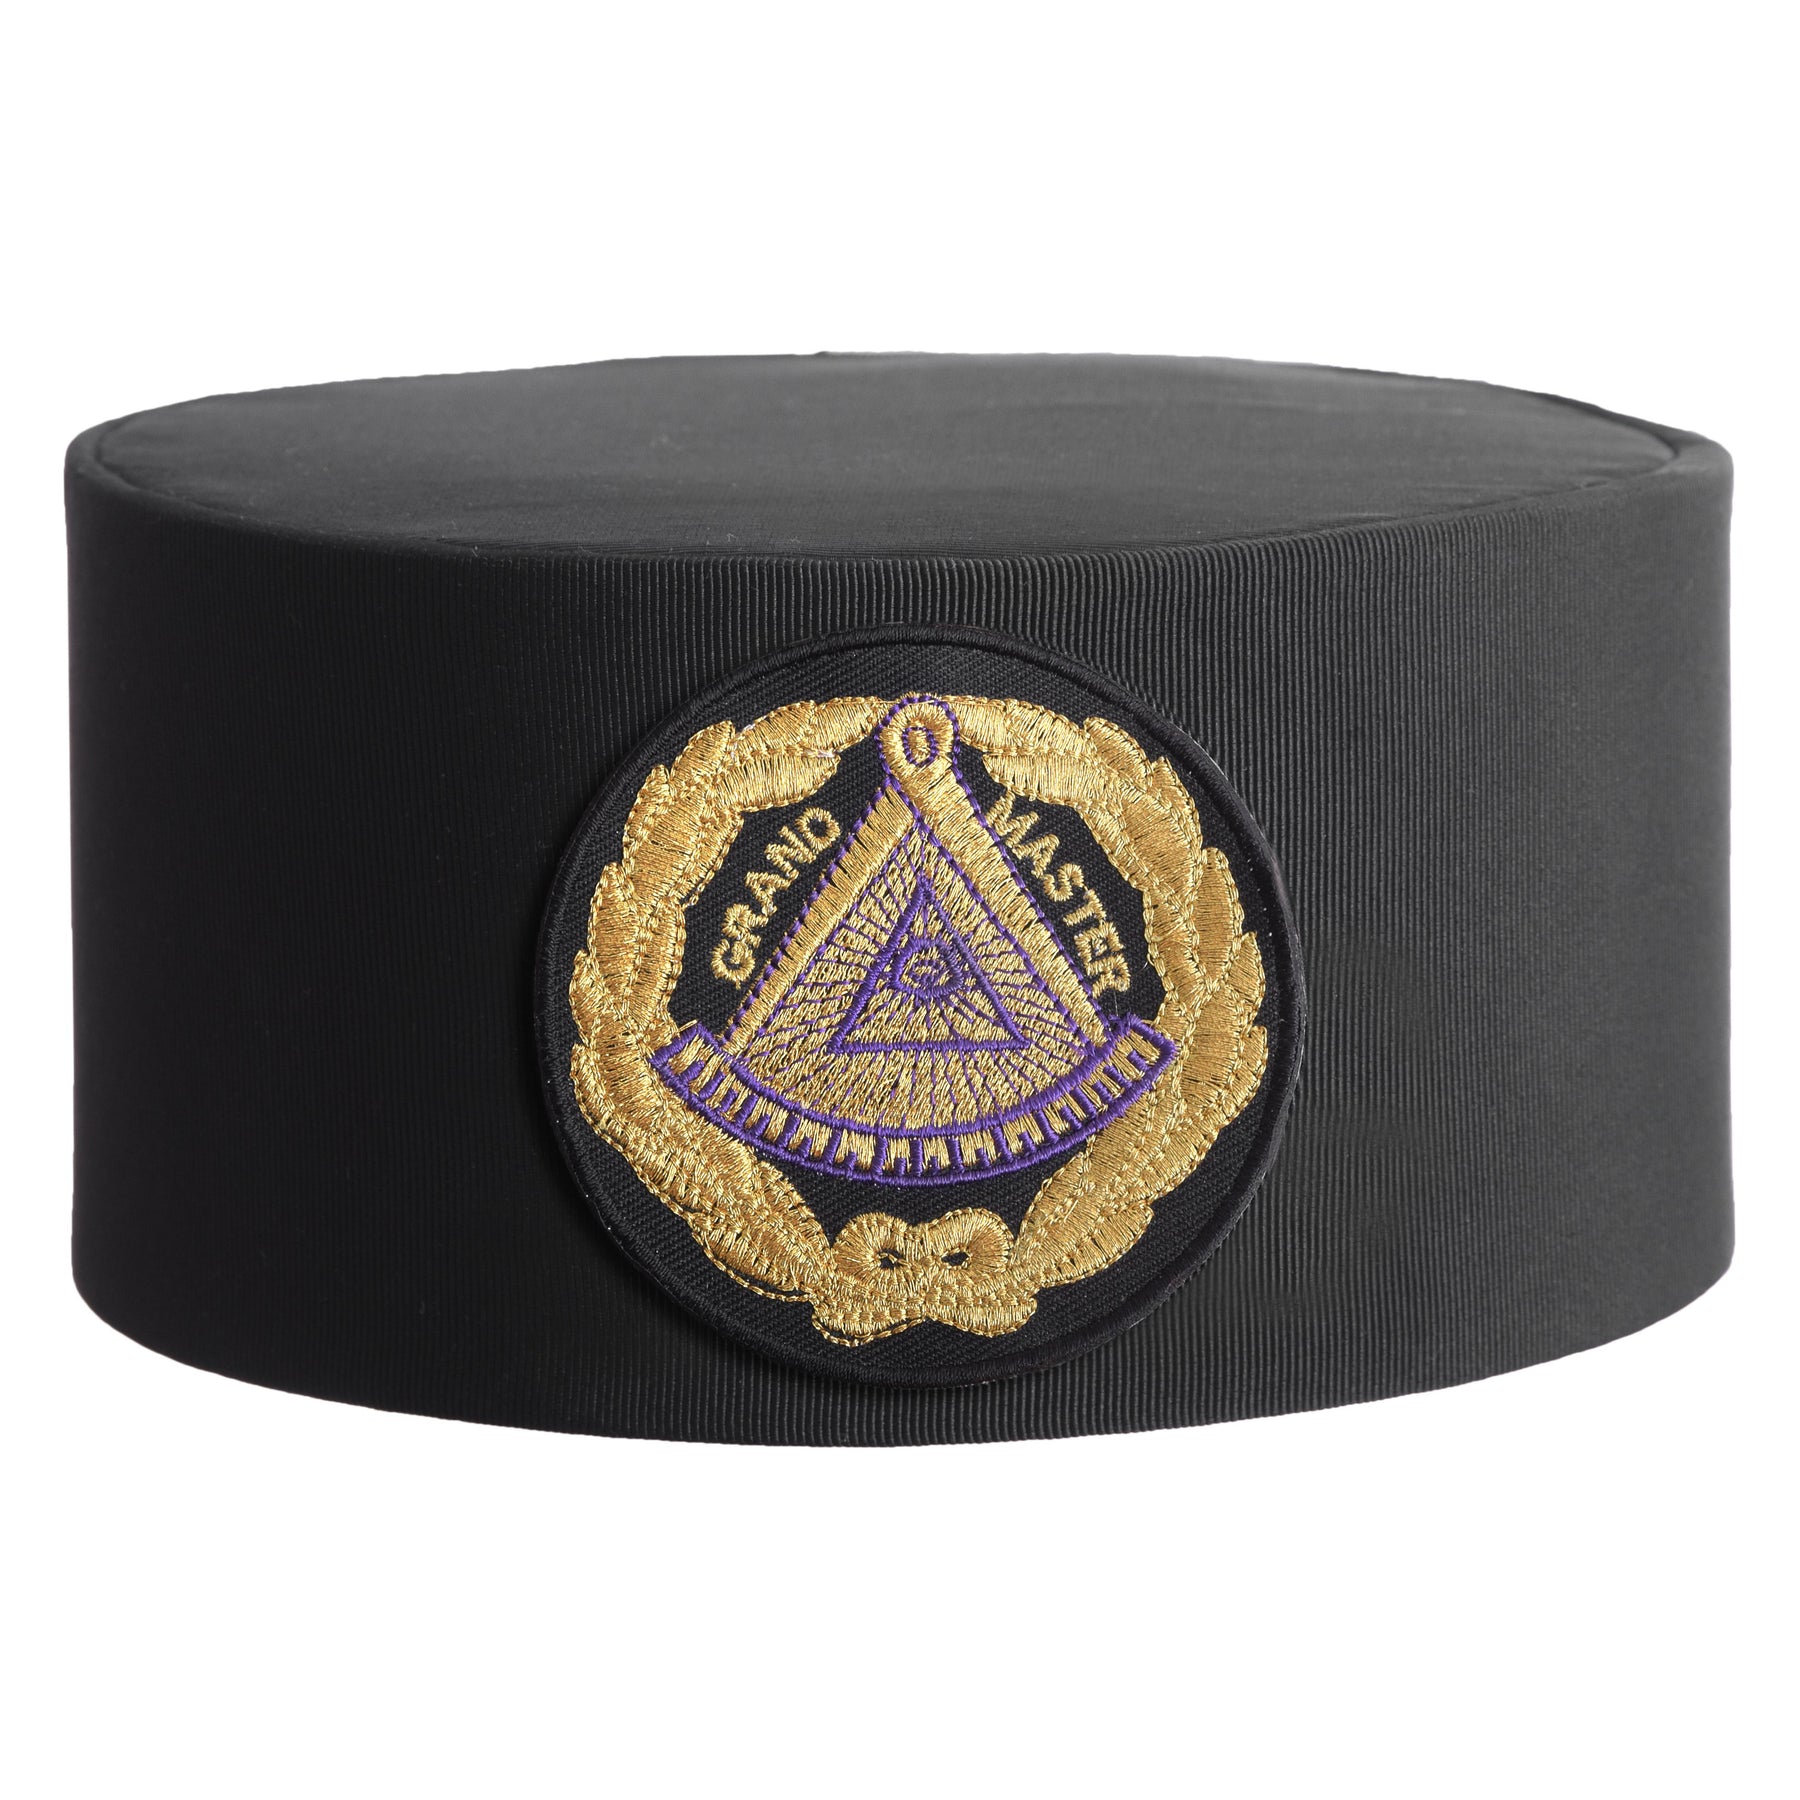 Grand Master Blue Lodge Crown Cap - Black With Gold Emblem & Wreath - Bricks Masons